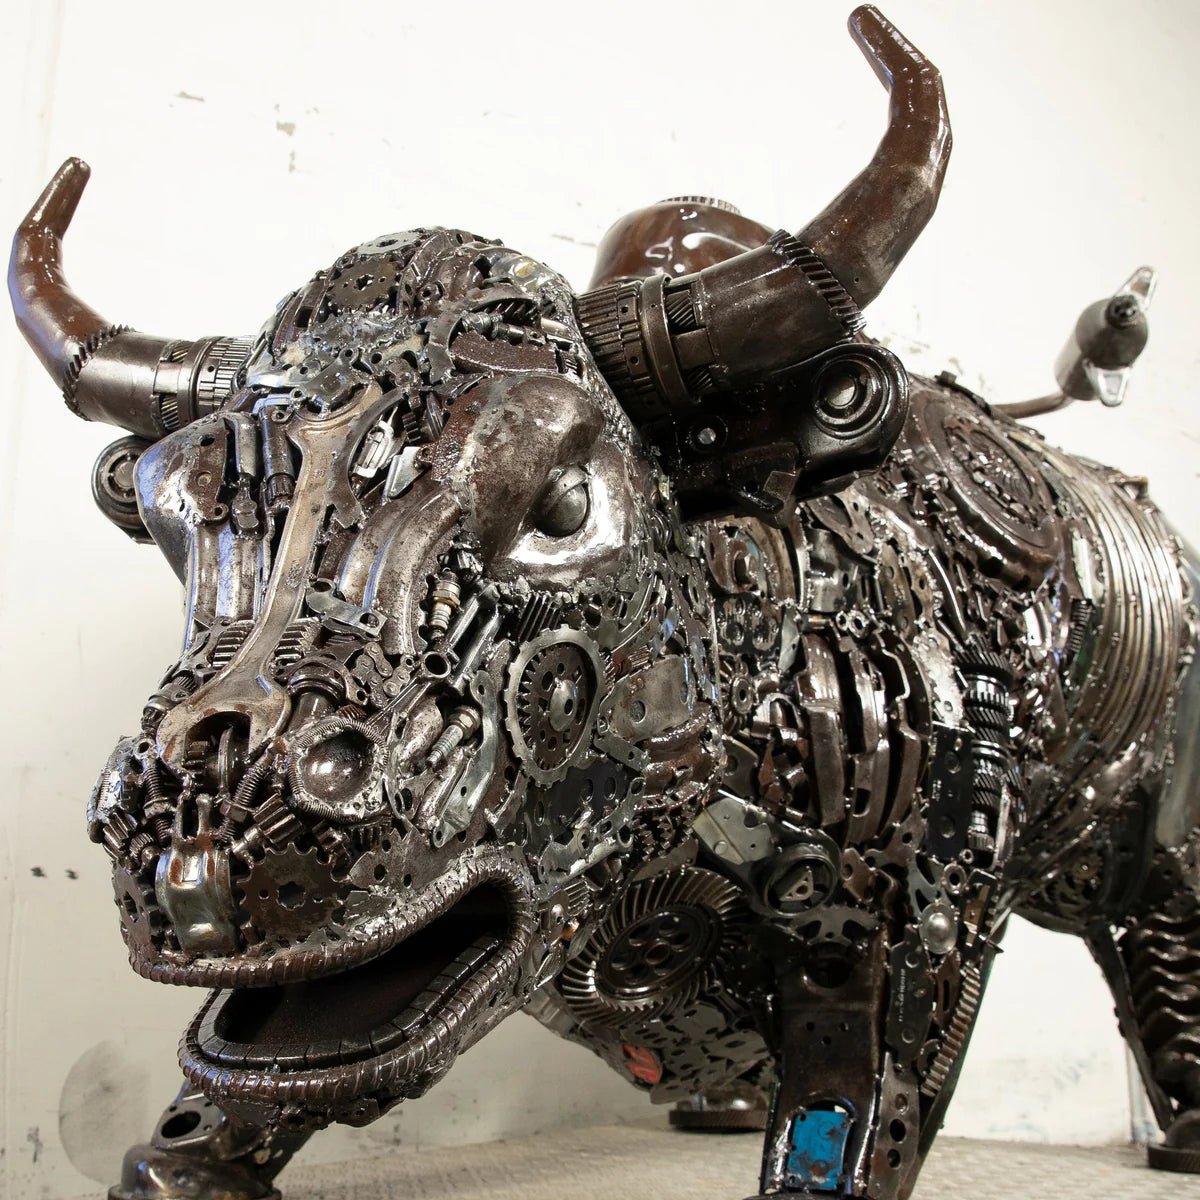 98 Wall Street Bull Inspired Recycled Metal Art Sculpture - Xformerz